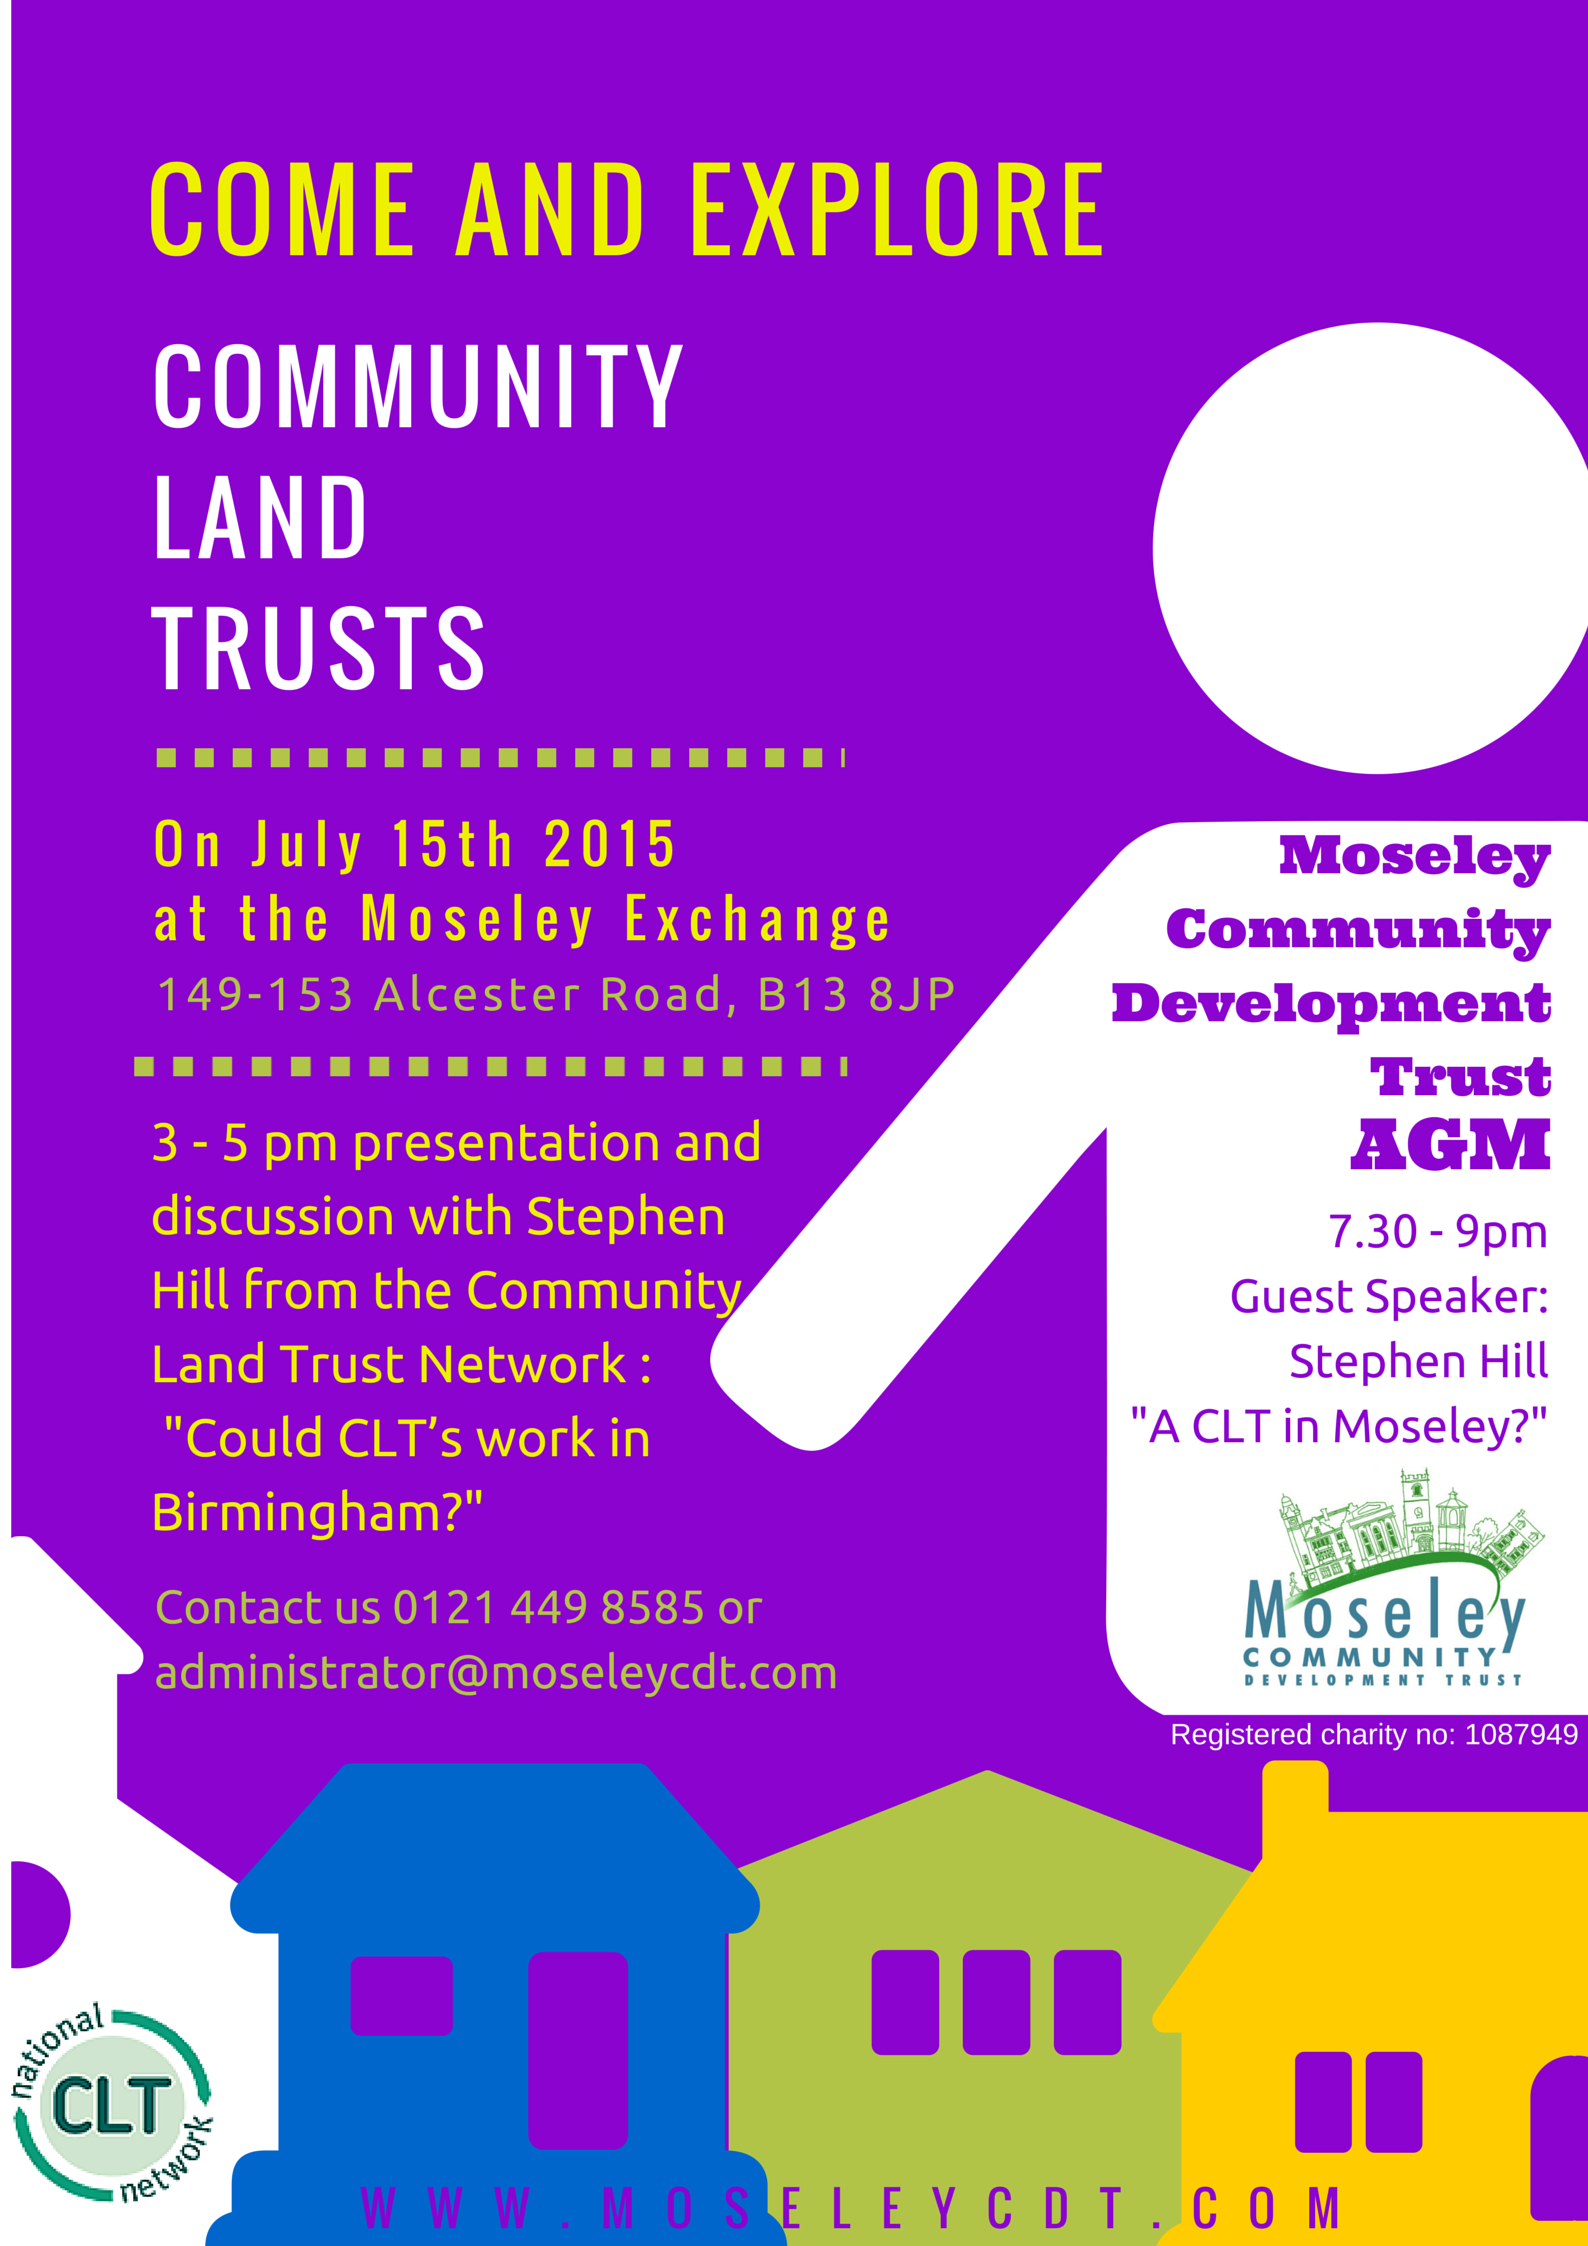 Moseley Community Development Trust AGM